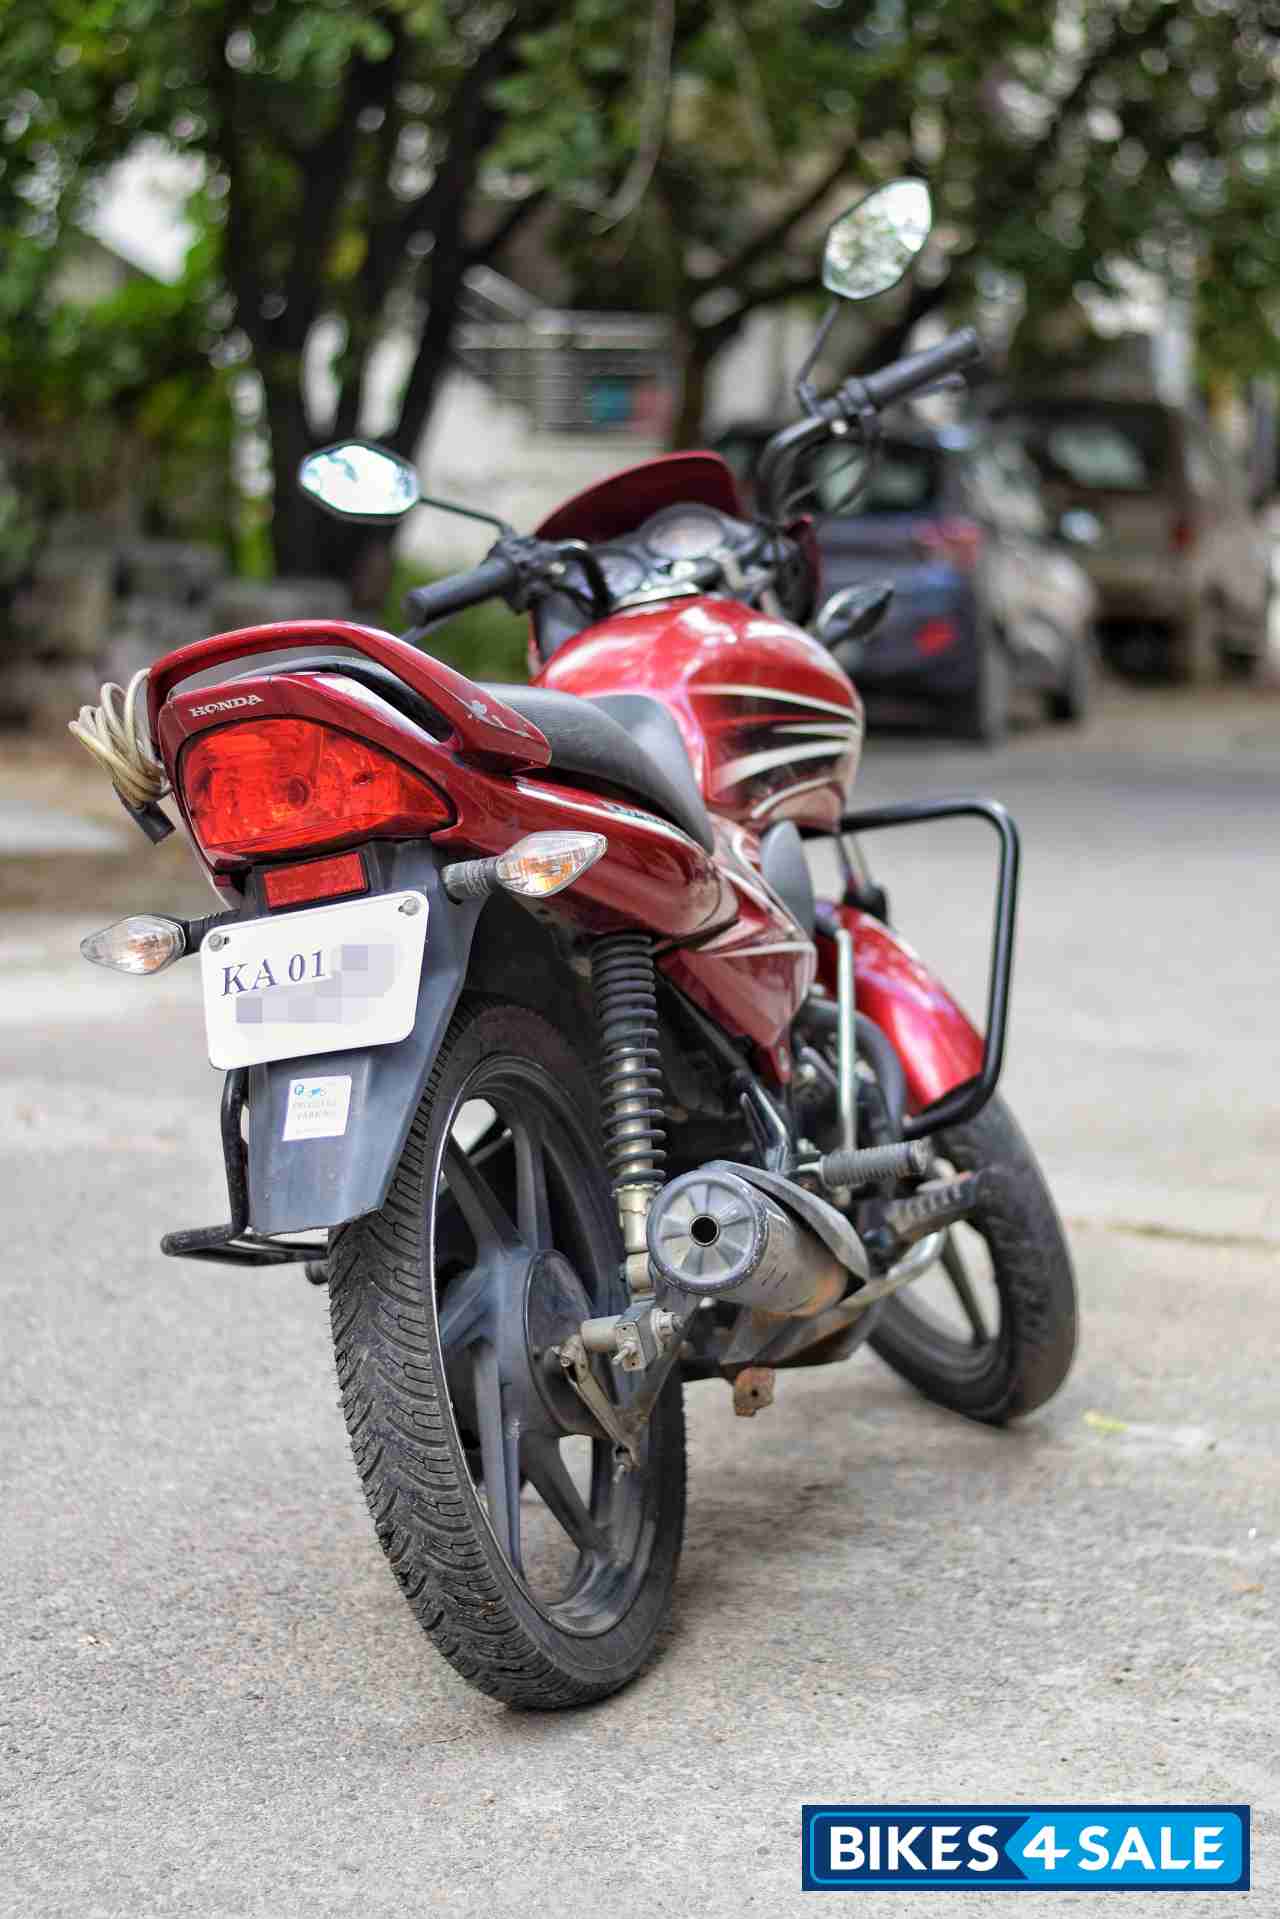 Used 2013 model Honda Dream Yuga for sale in Bangalore. ID 297802 